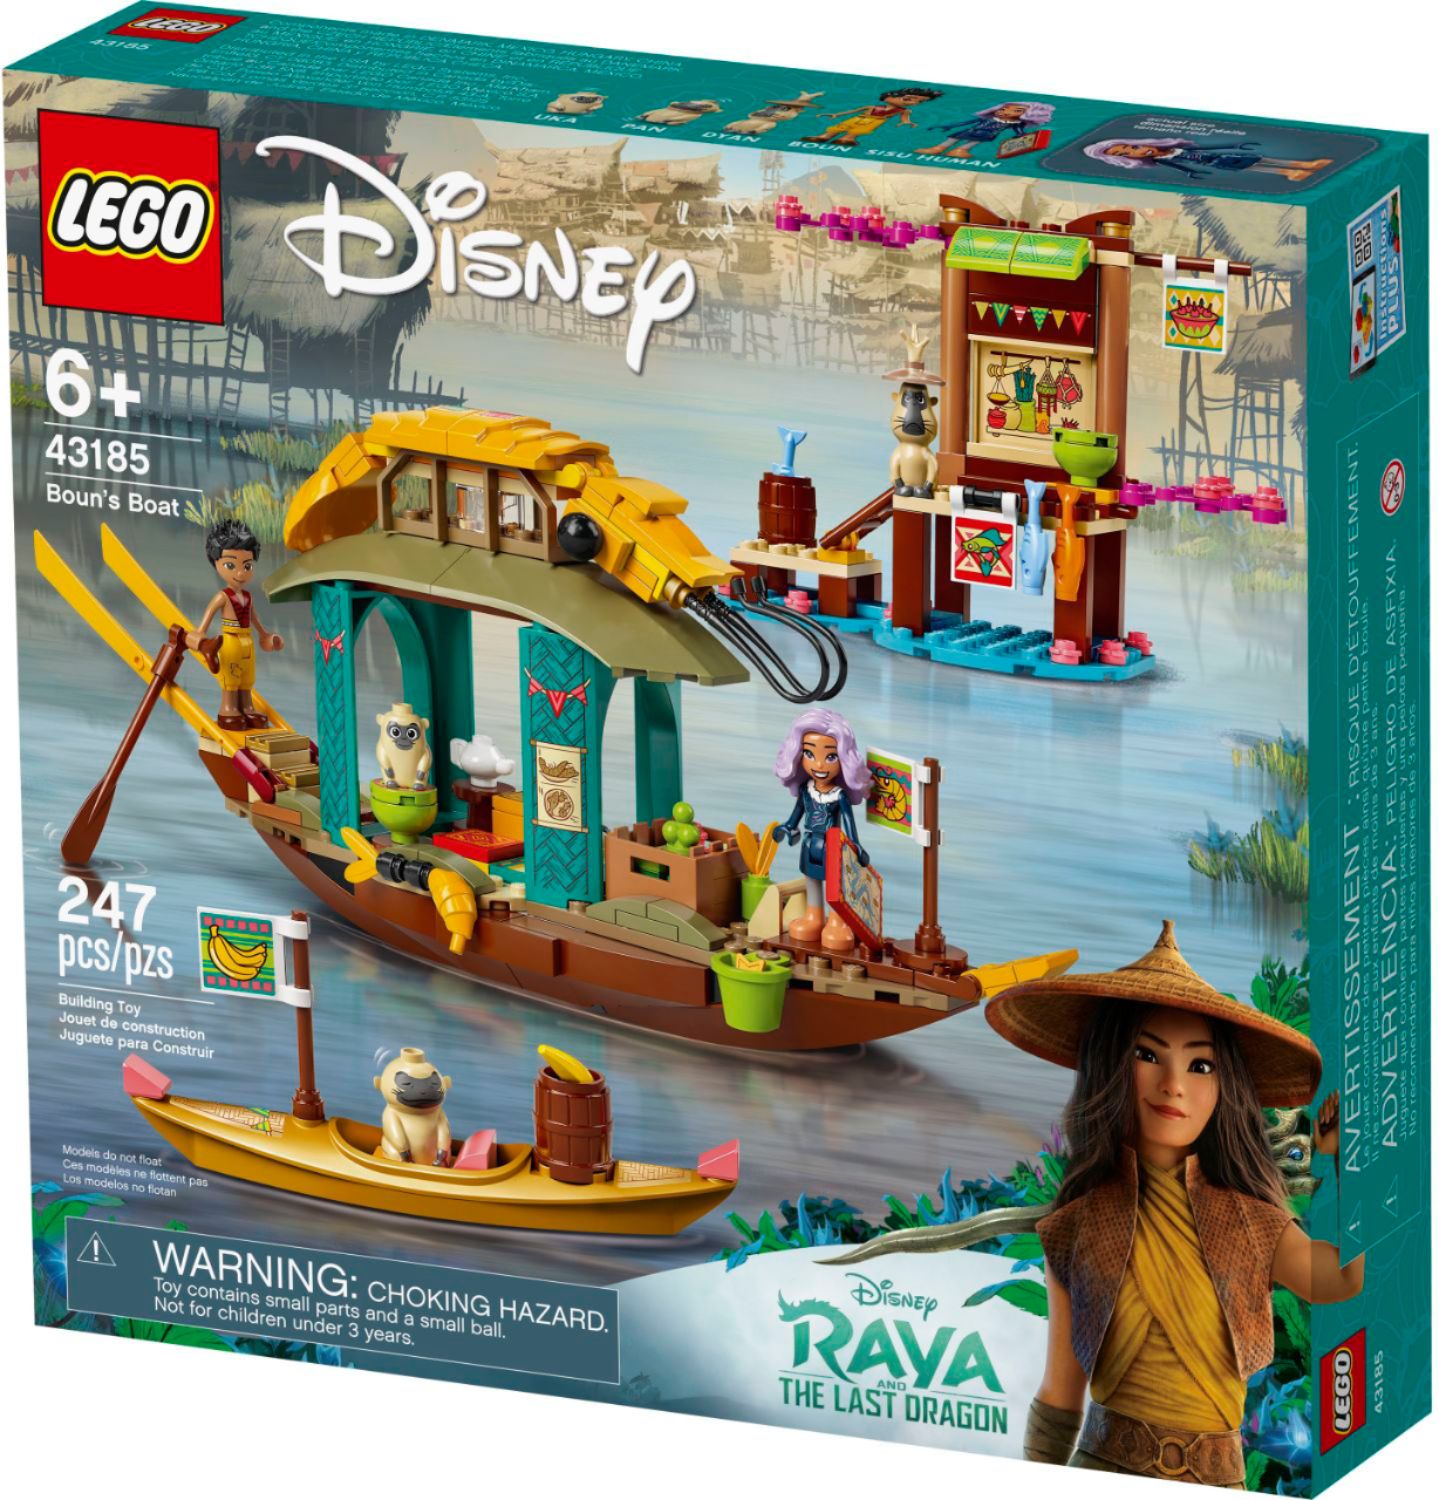 Angle View: LEGO Disney Princess Boun's Boat 43185